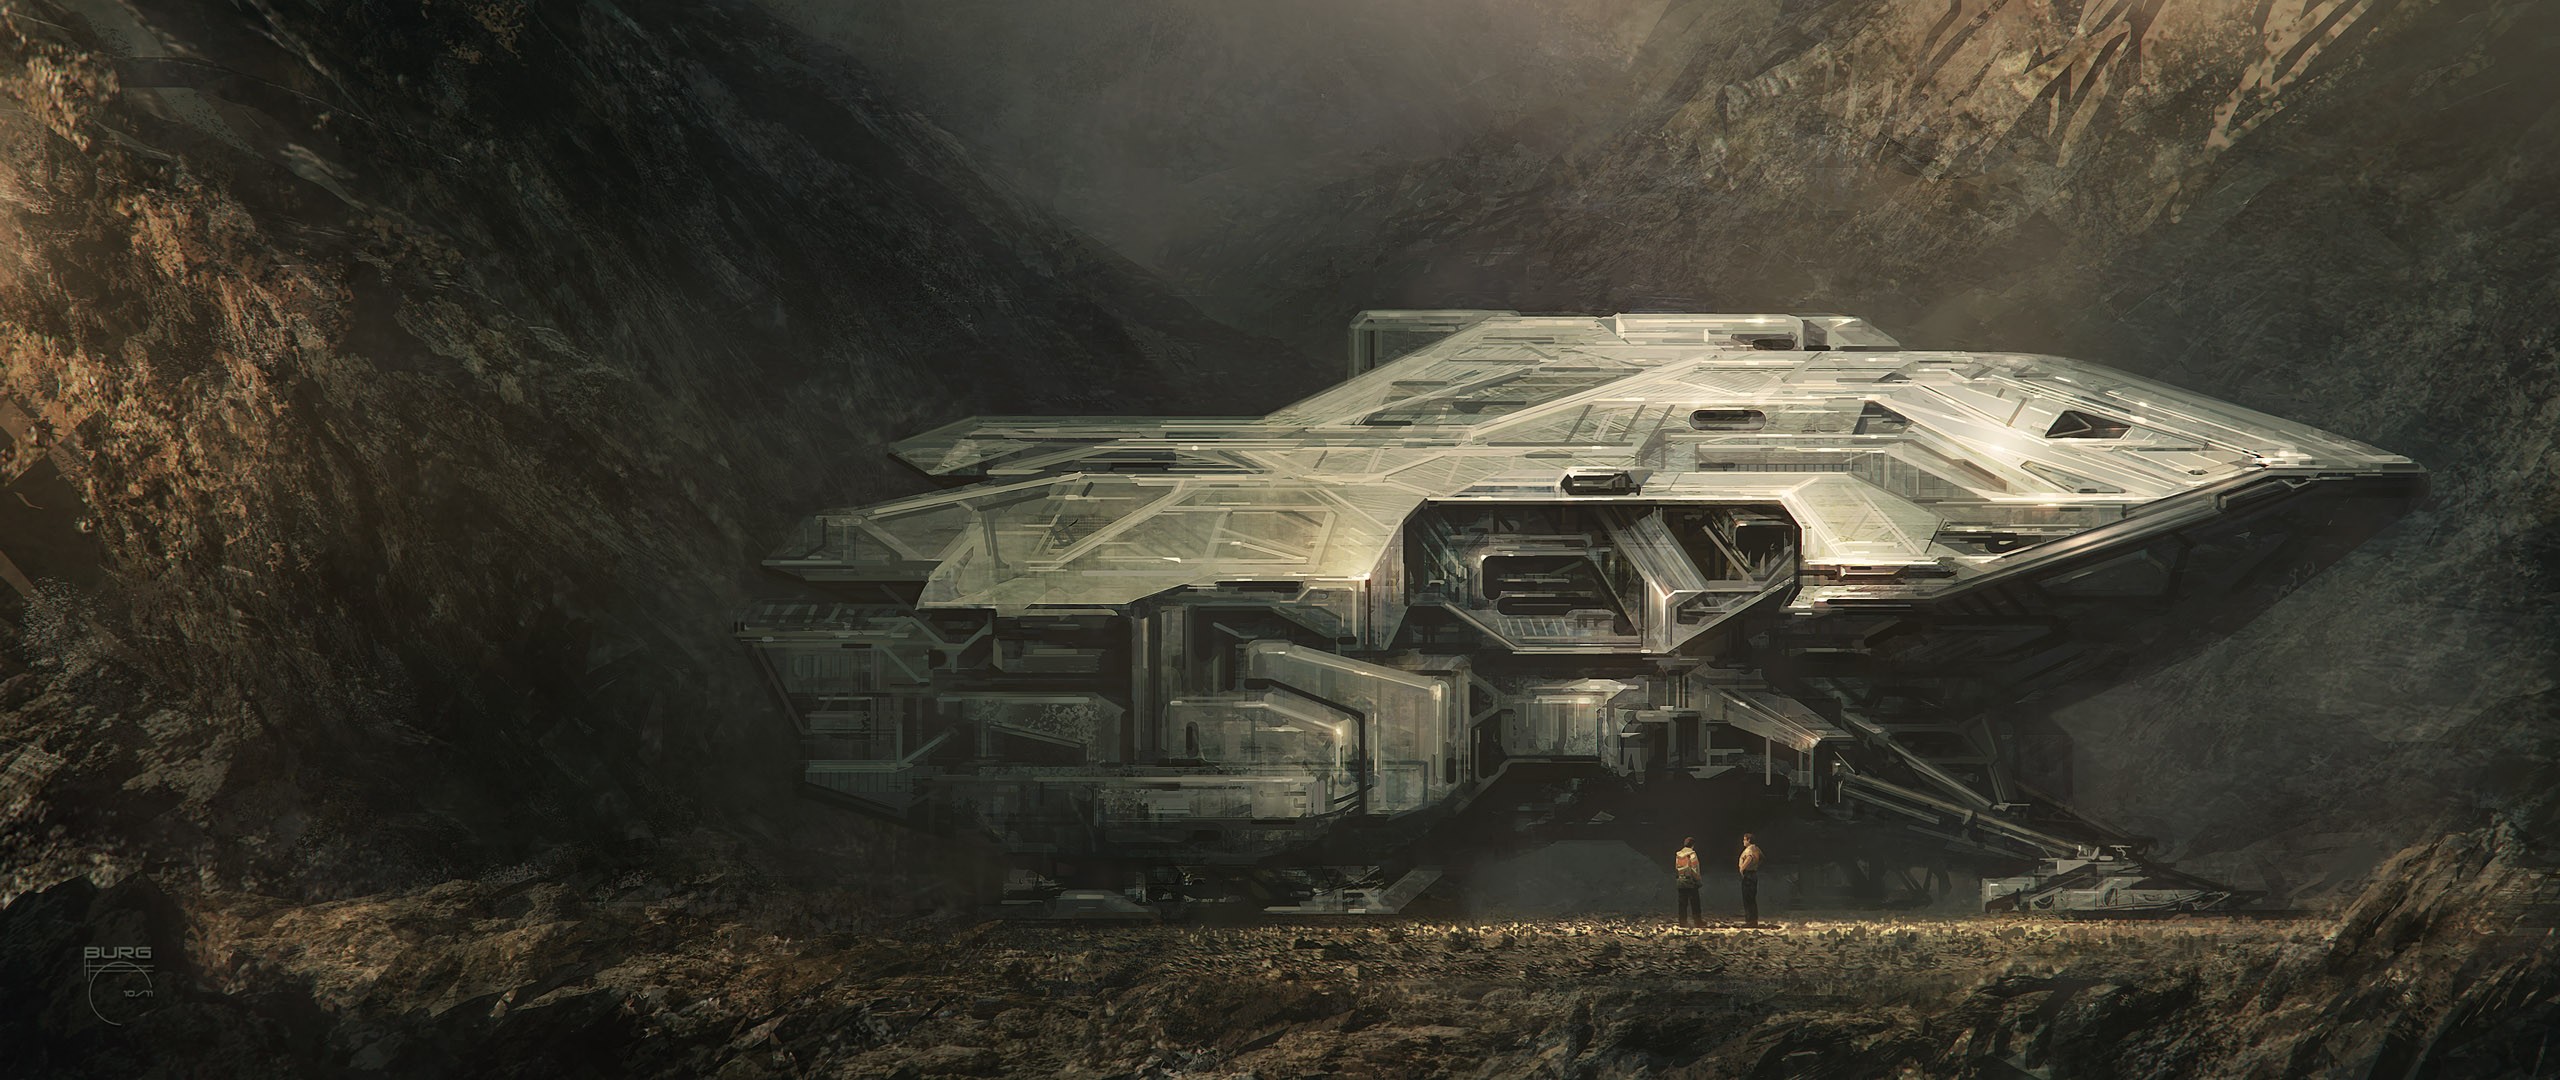 General 2560x1080 artwork science fiction spaceship vehicle futuristic